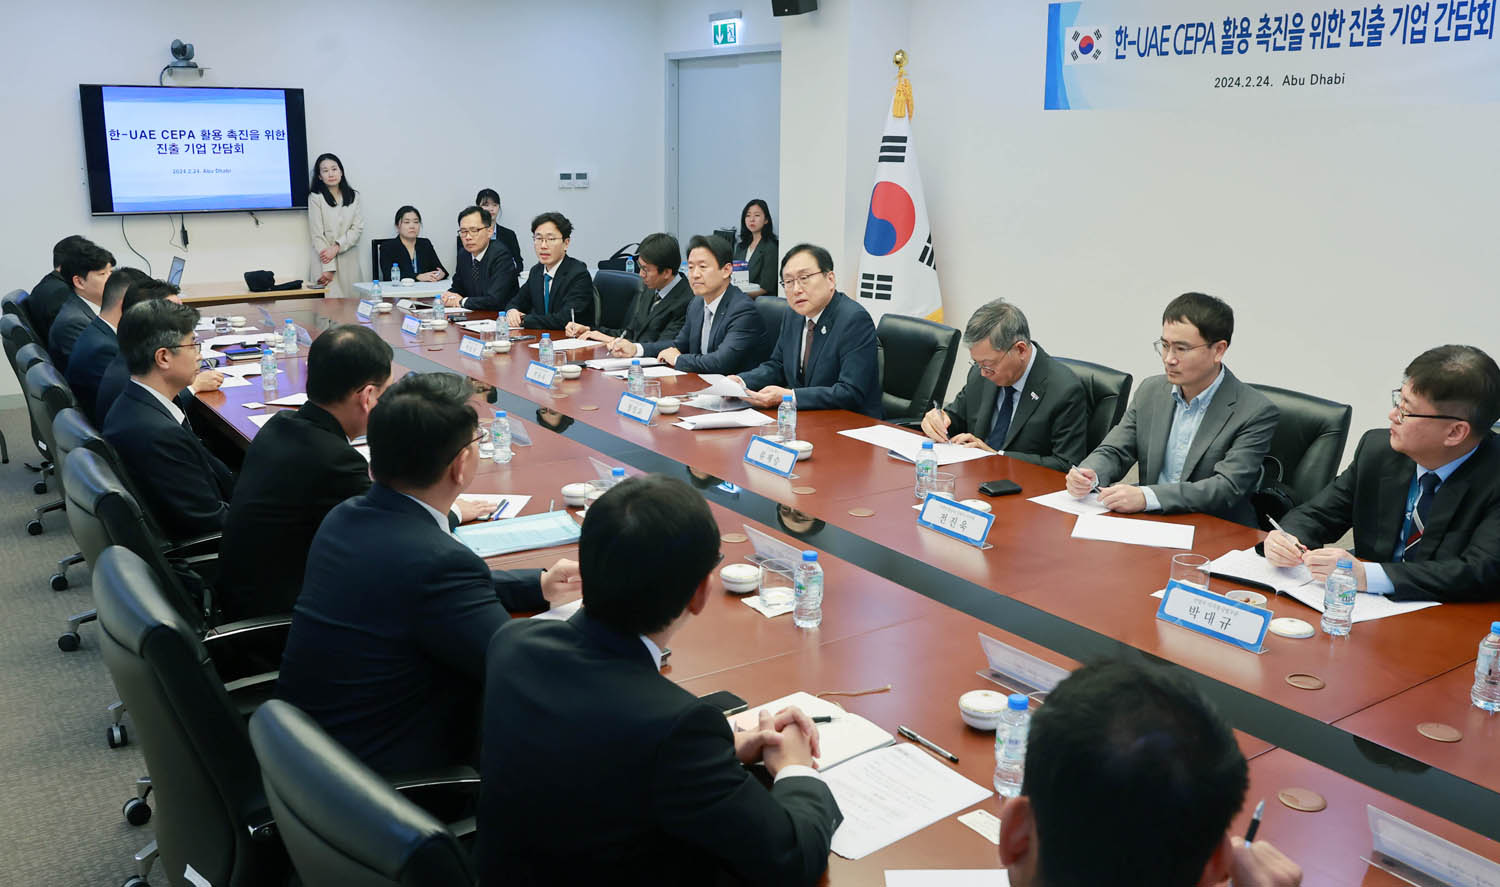 Trade Minister meets with Korean businesses in UAE to discuss Korea-UAE CEPA